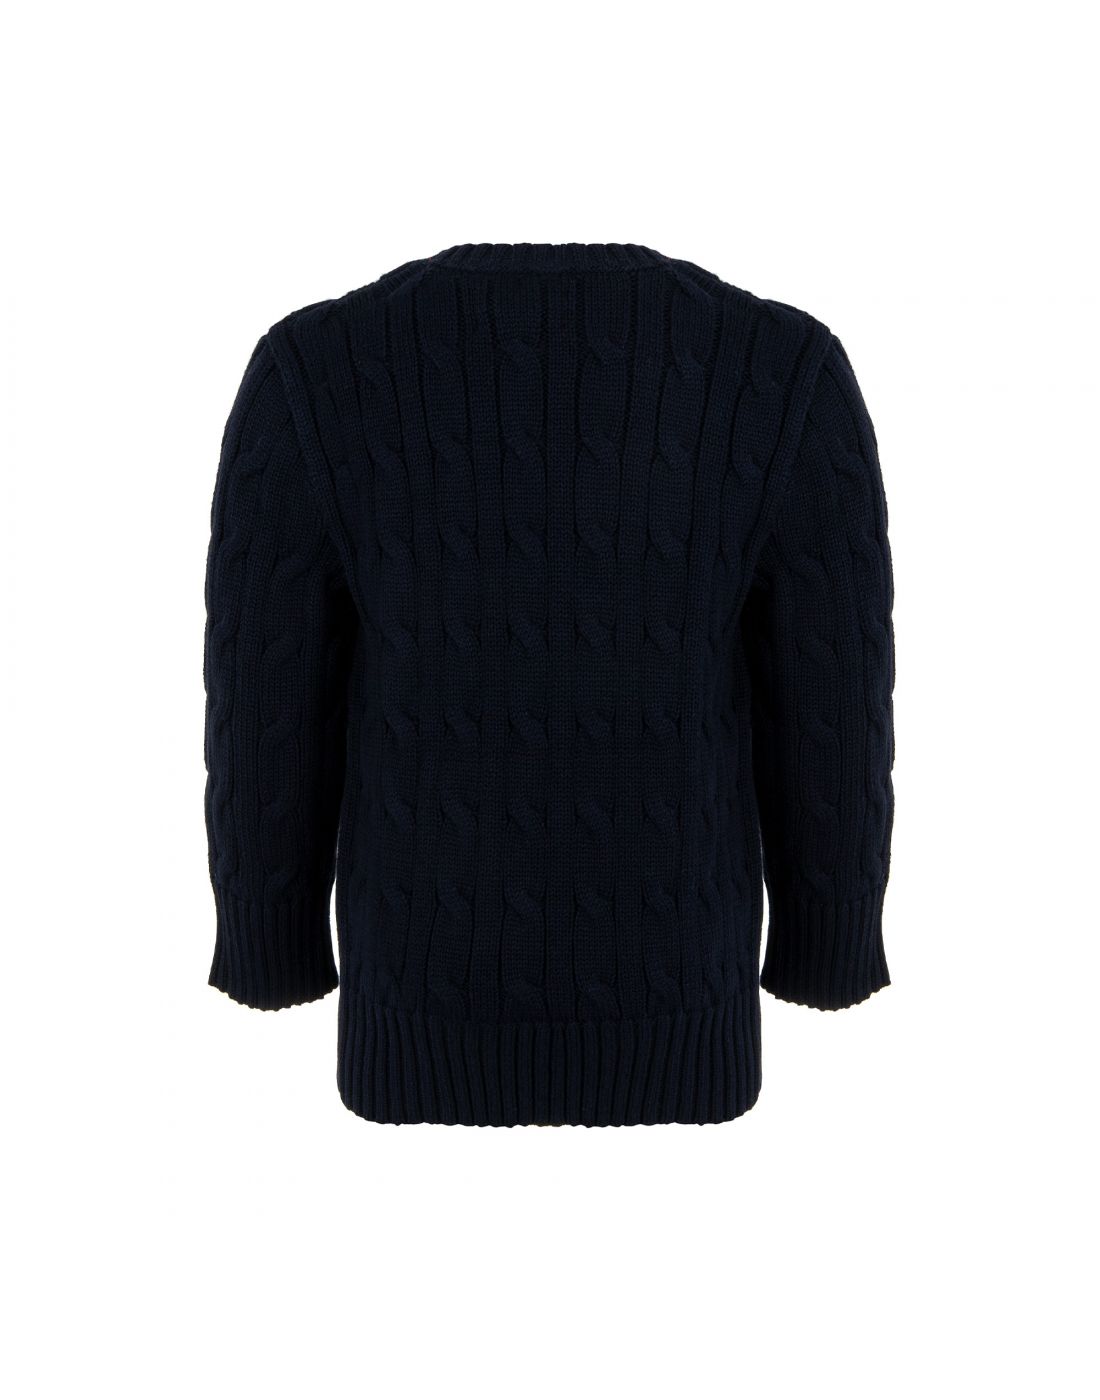 Polo Ralph Lauren Boys Sweater